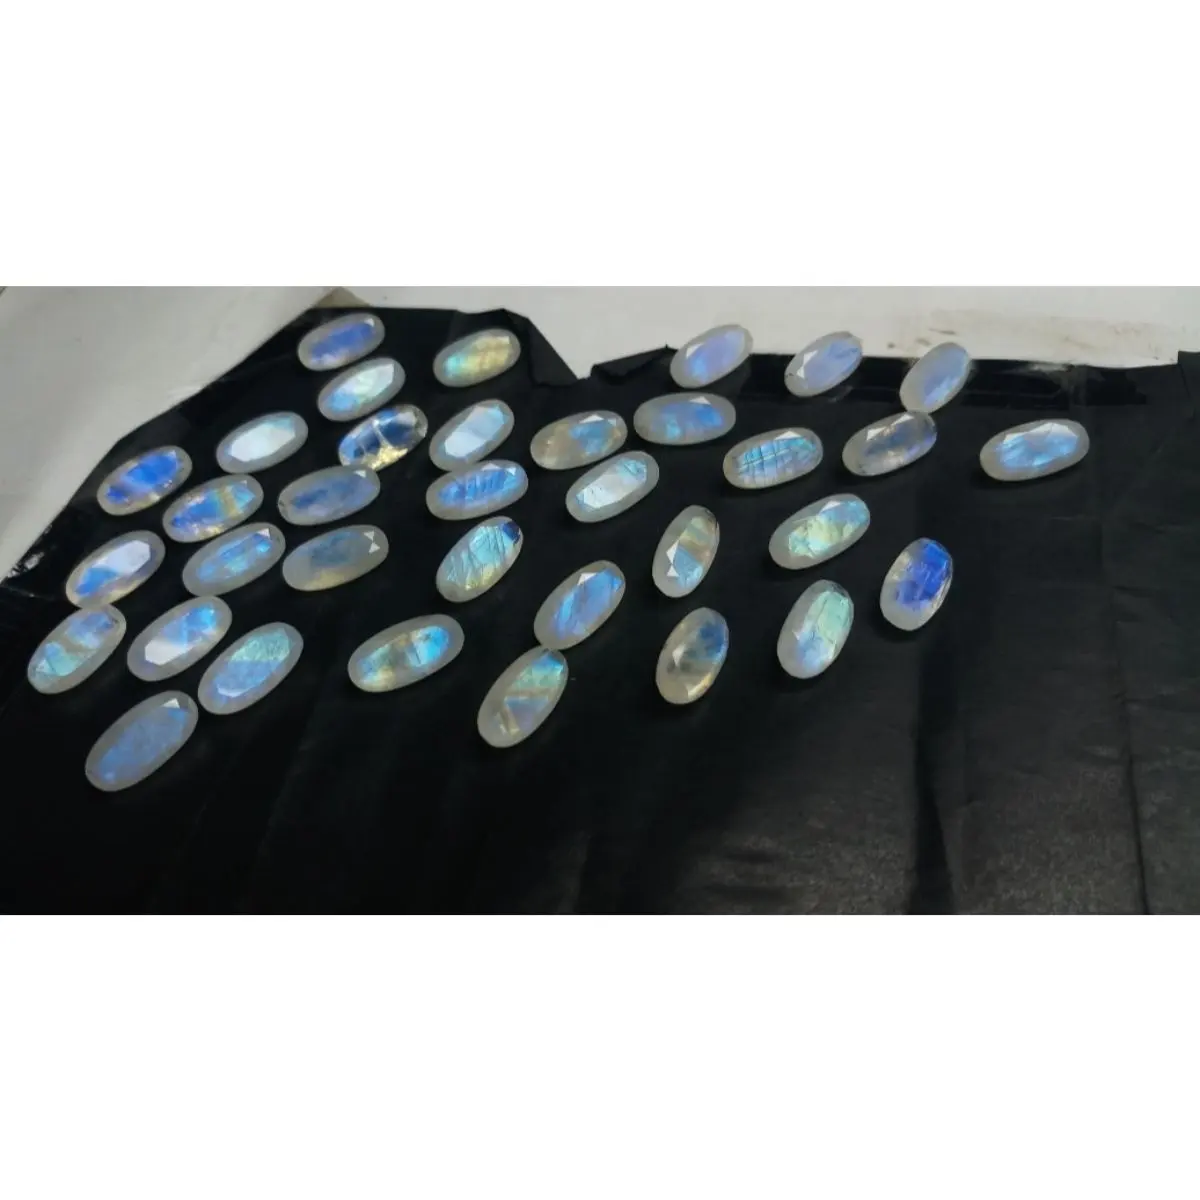 8X16 mm Oval Shape Natural Blue Flash White Rainbow Moonstone Faceted Loose Cut Gemstones Handmade bulk Stones